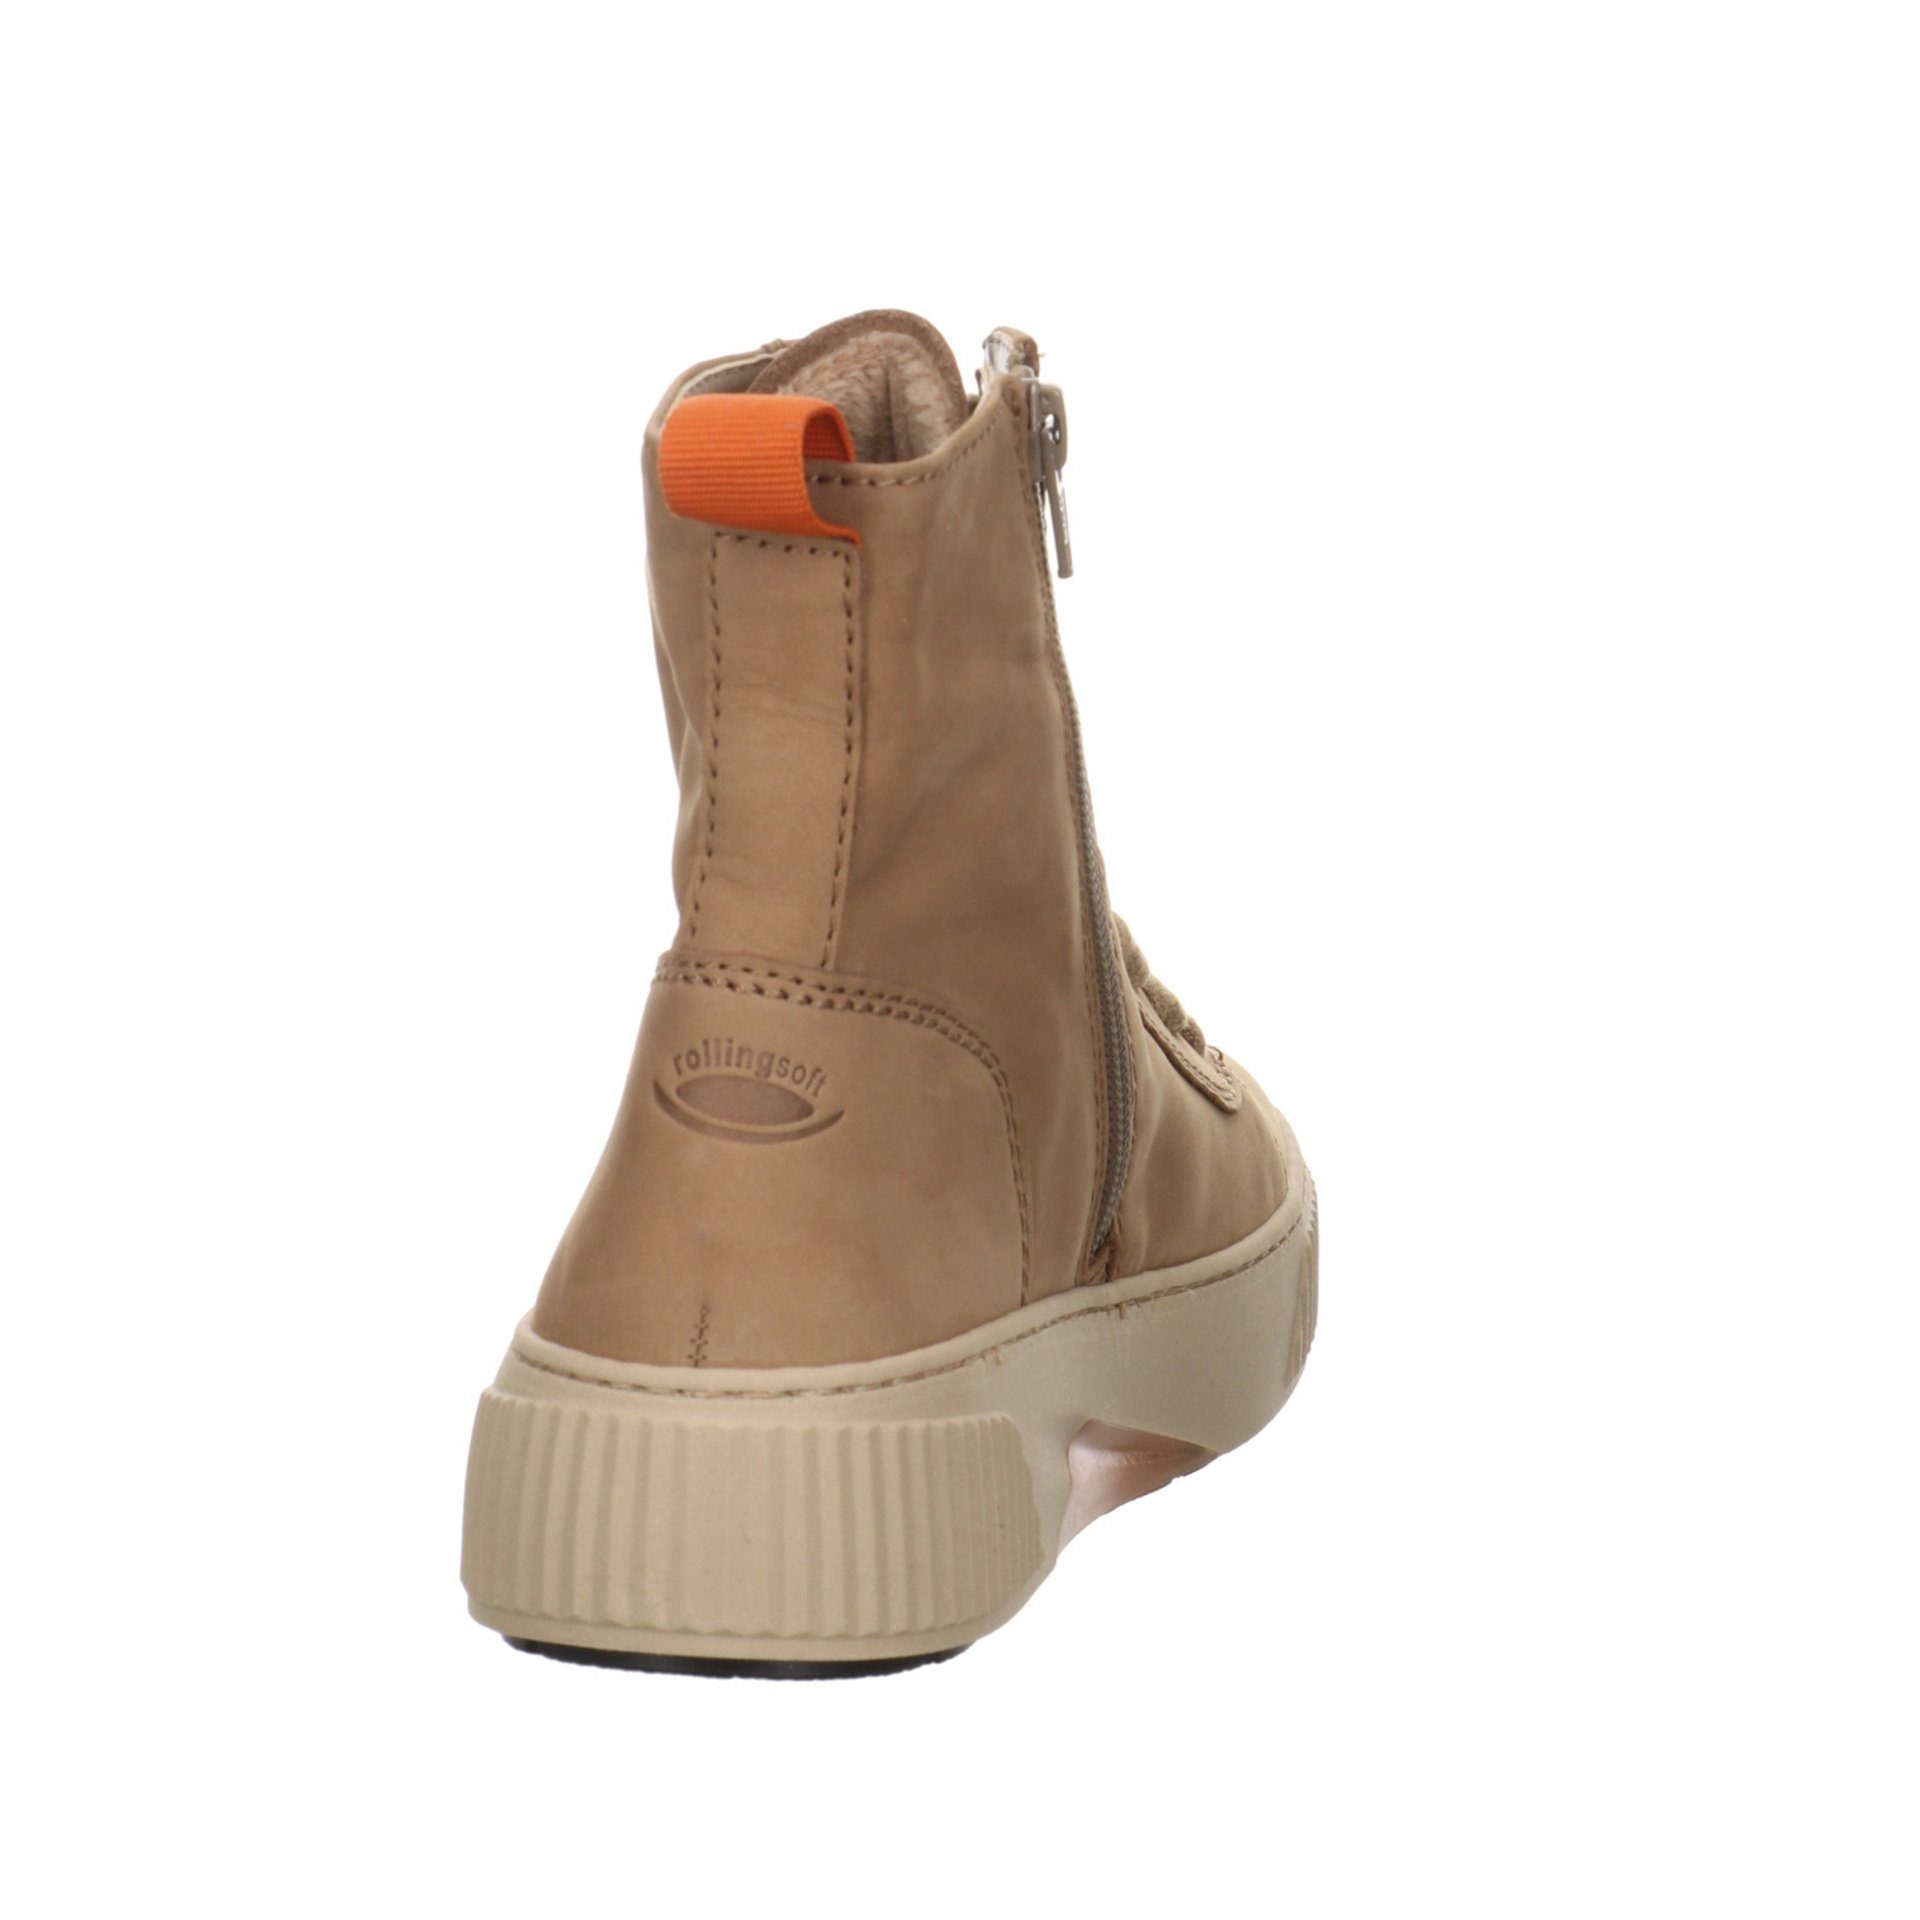 Gabor Boots Nubukleder uni (wood/orange) Nubukleder Braun Schnürstiefel